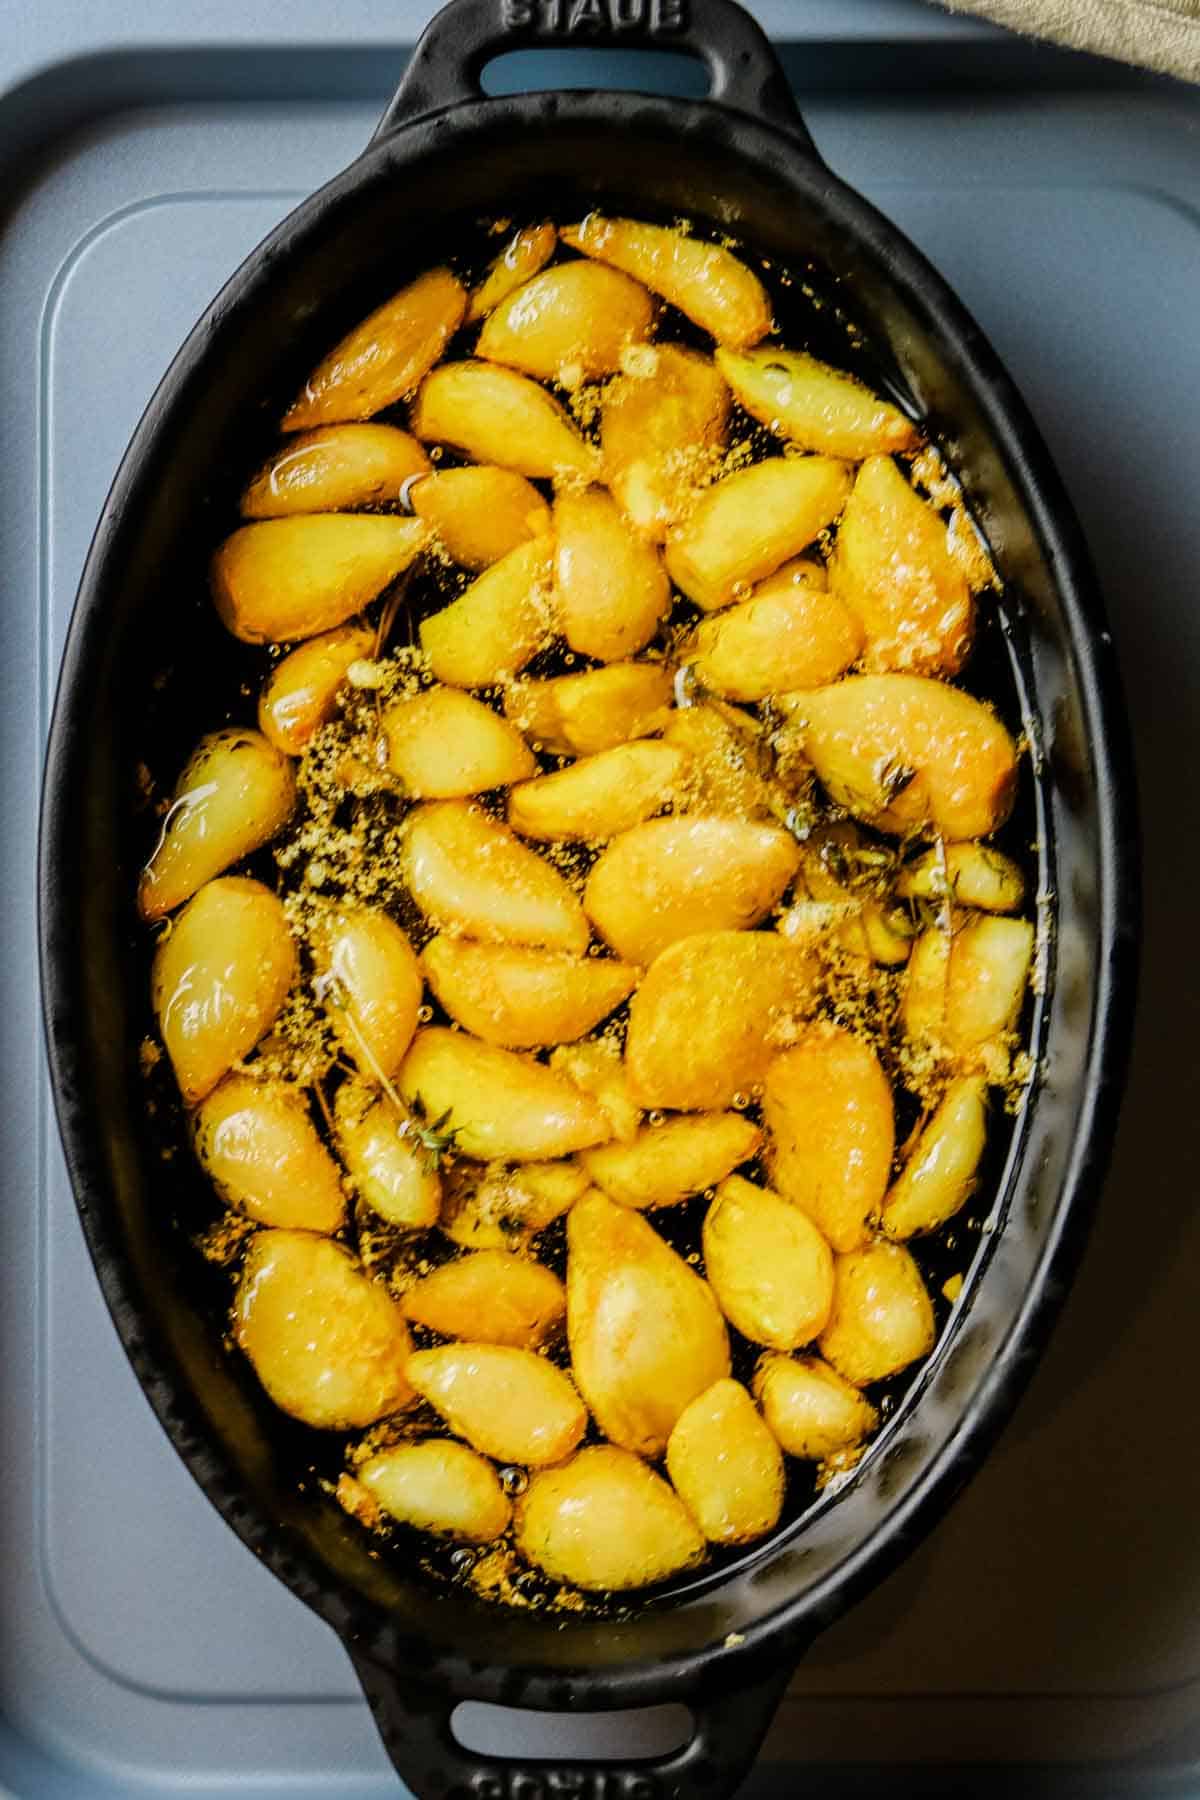 roasted garlic in oil.